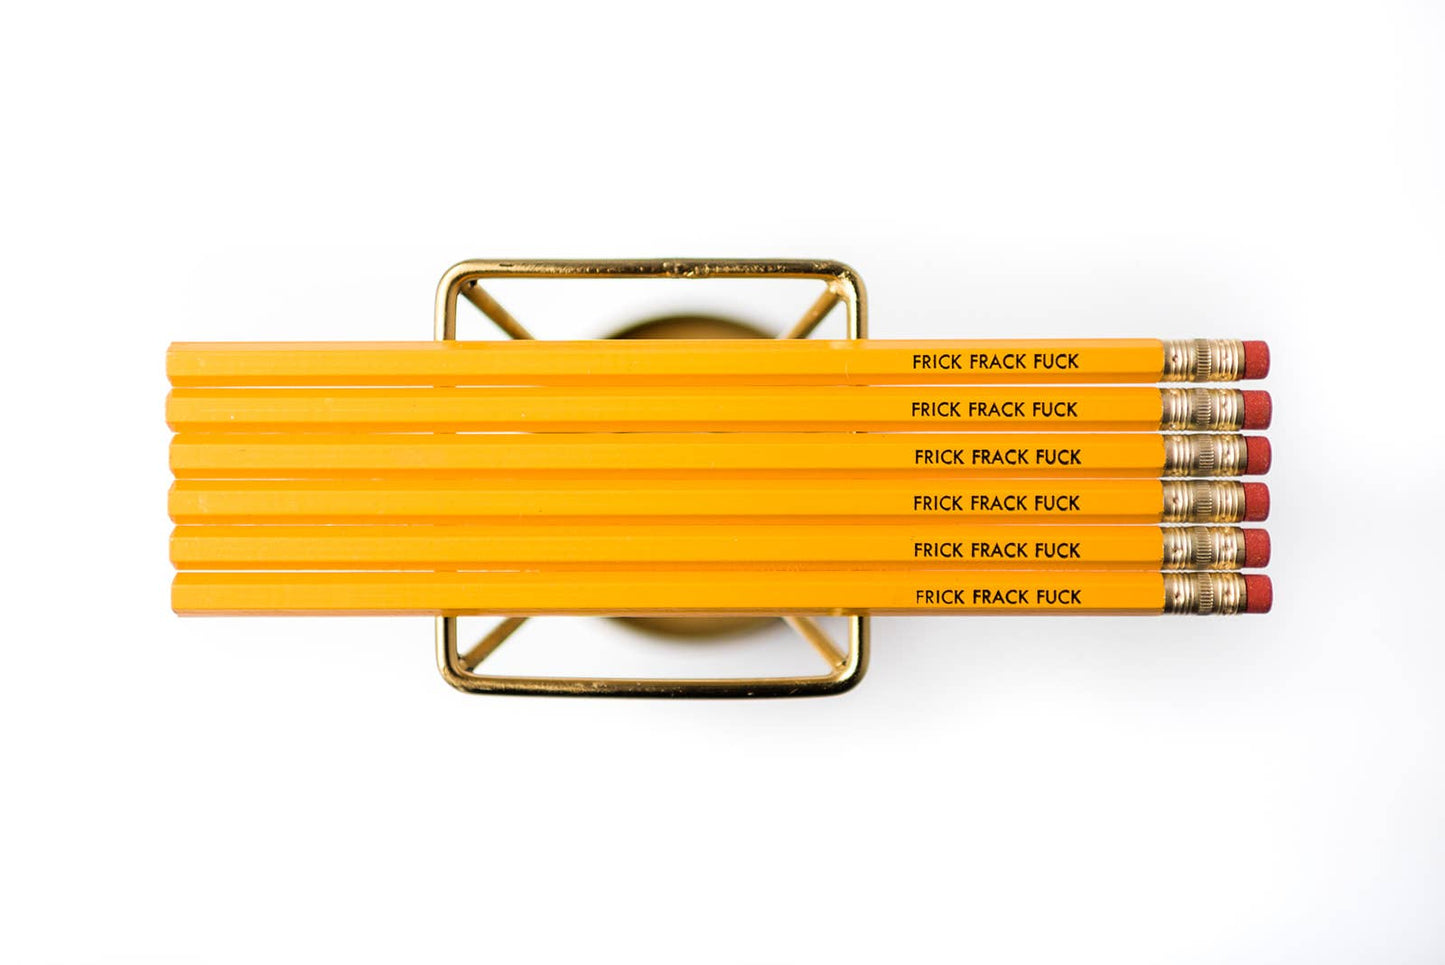 Frick Frack Fuck Pencils